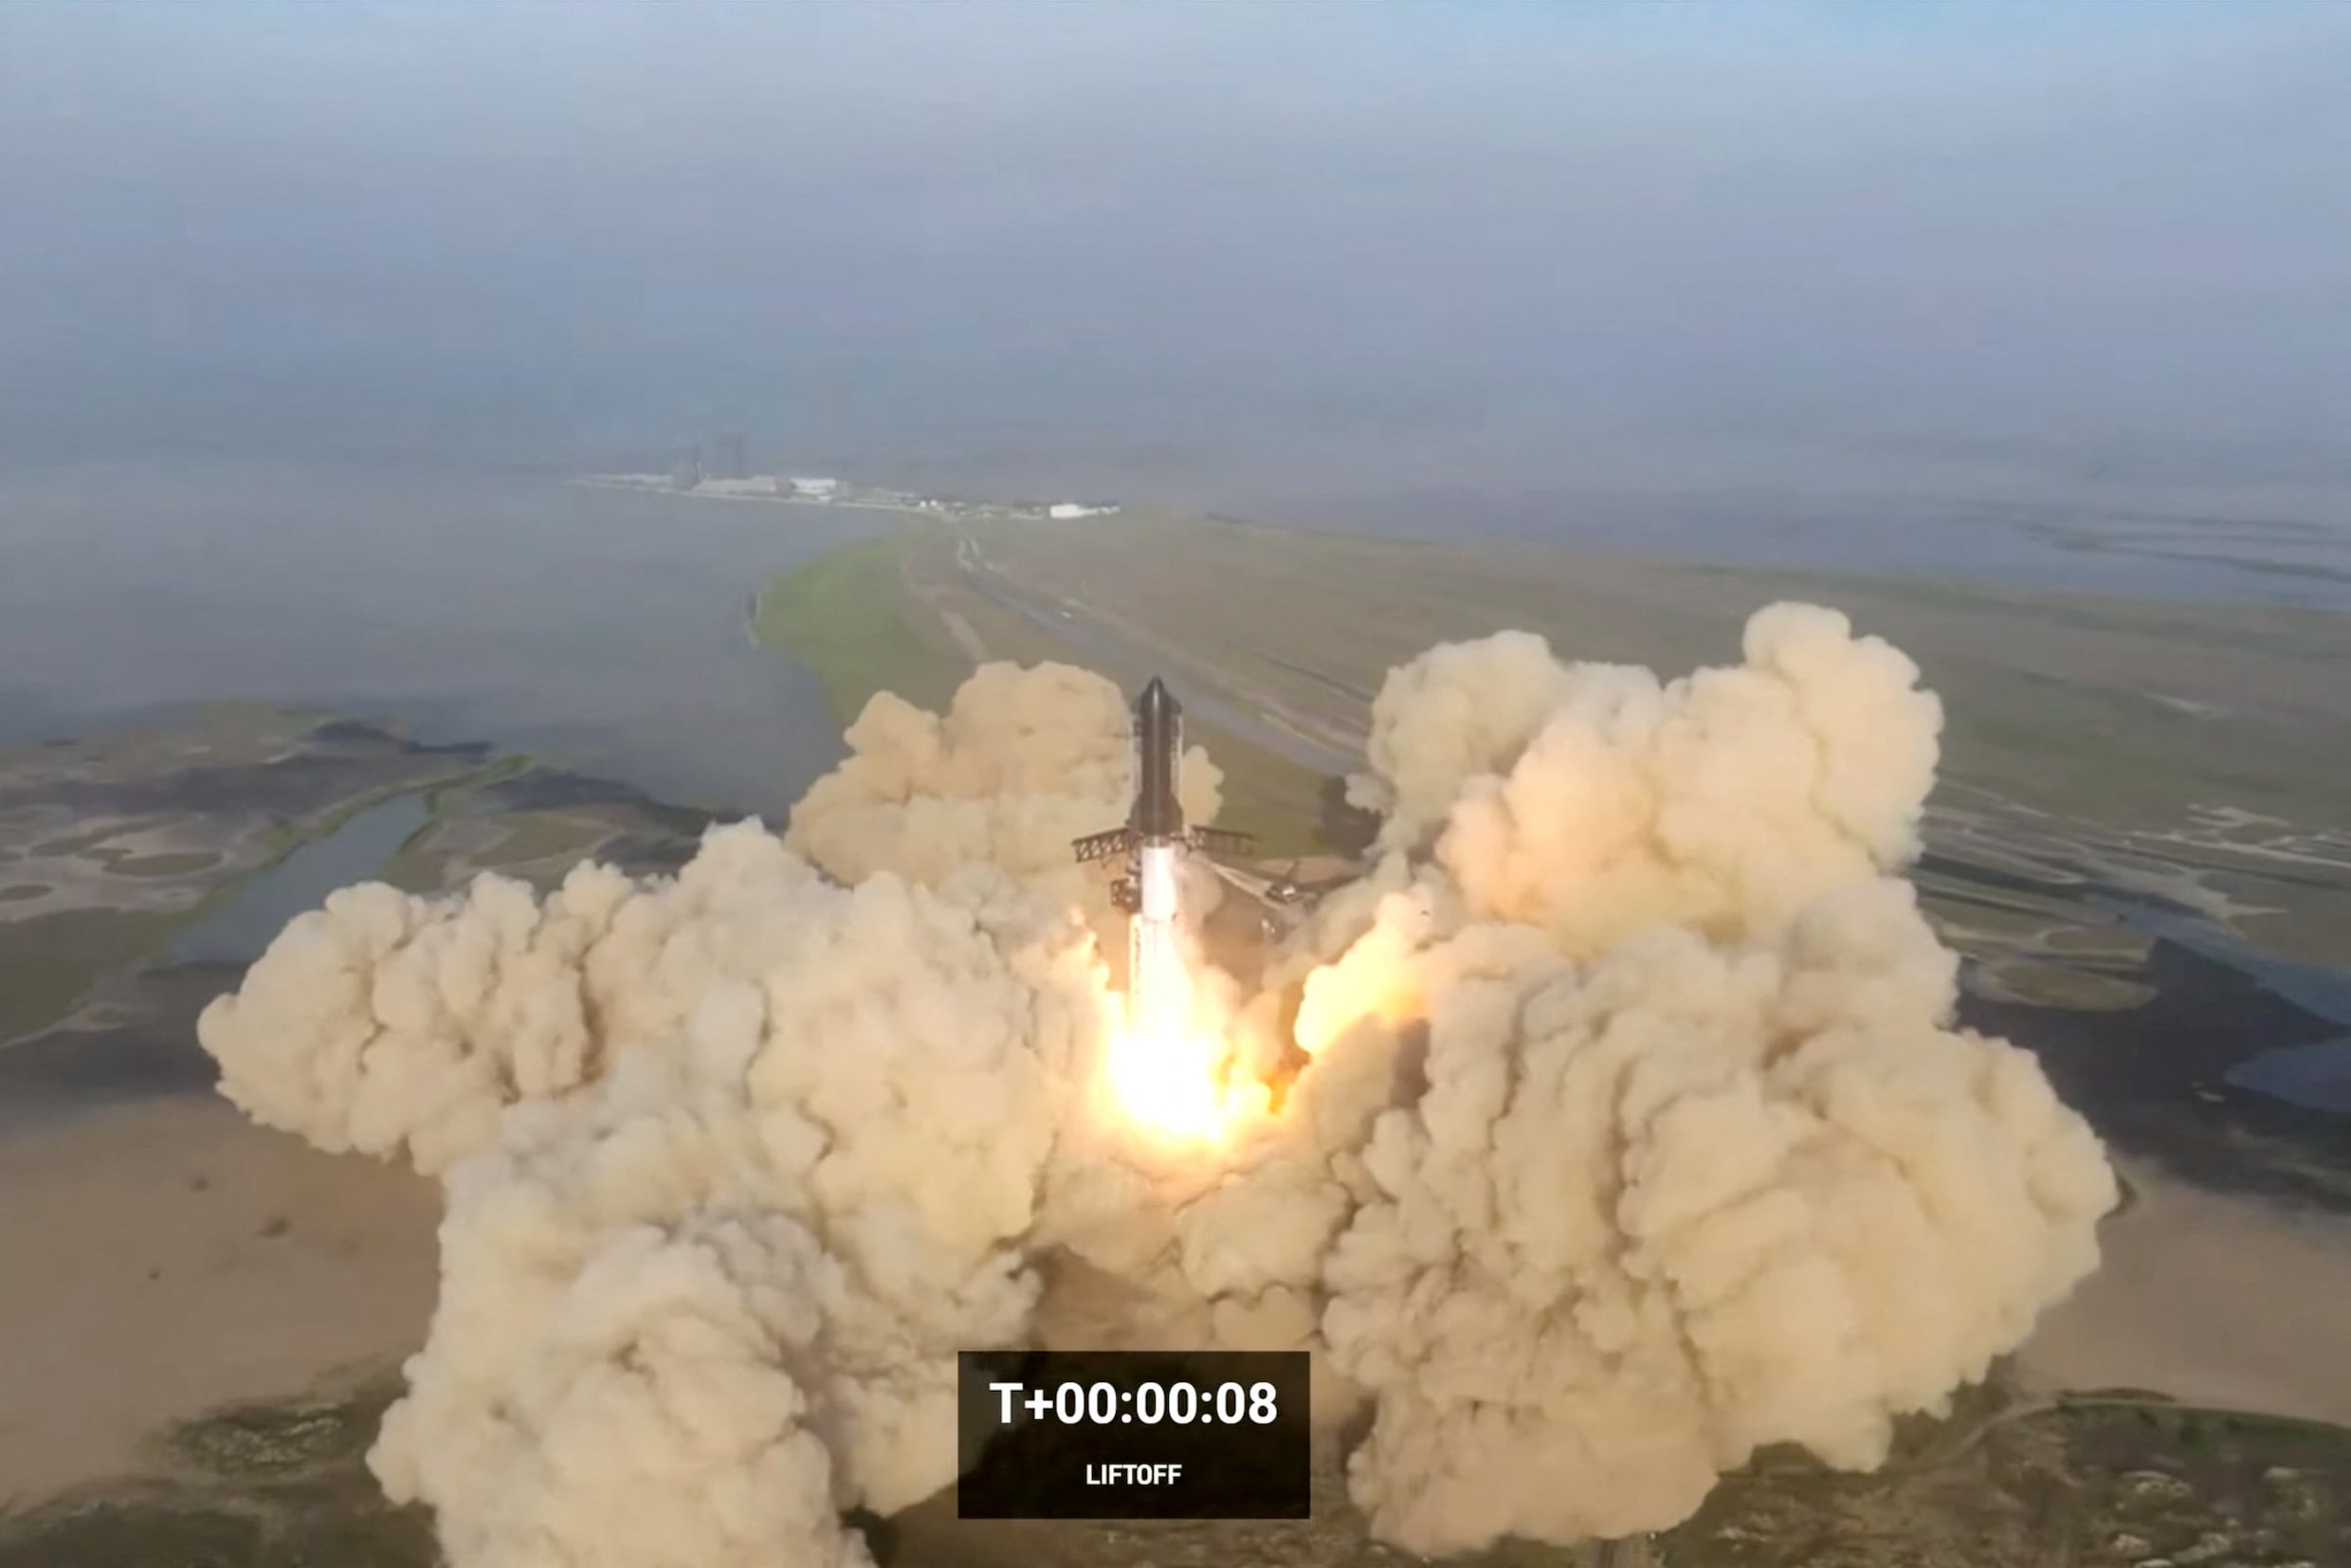 ▶ Starship van SpaceX ontploft enkele minuten na lancering: ‘Test zal helpen betrouwbaarheid te verbeteren’